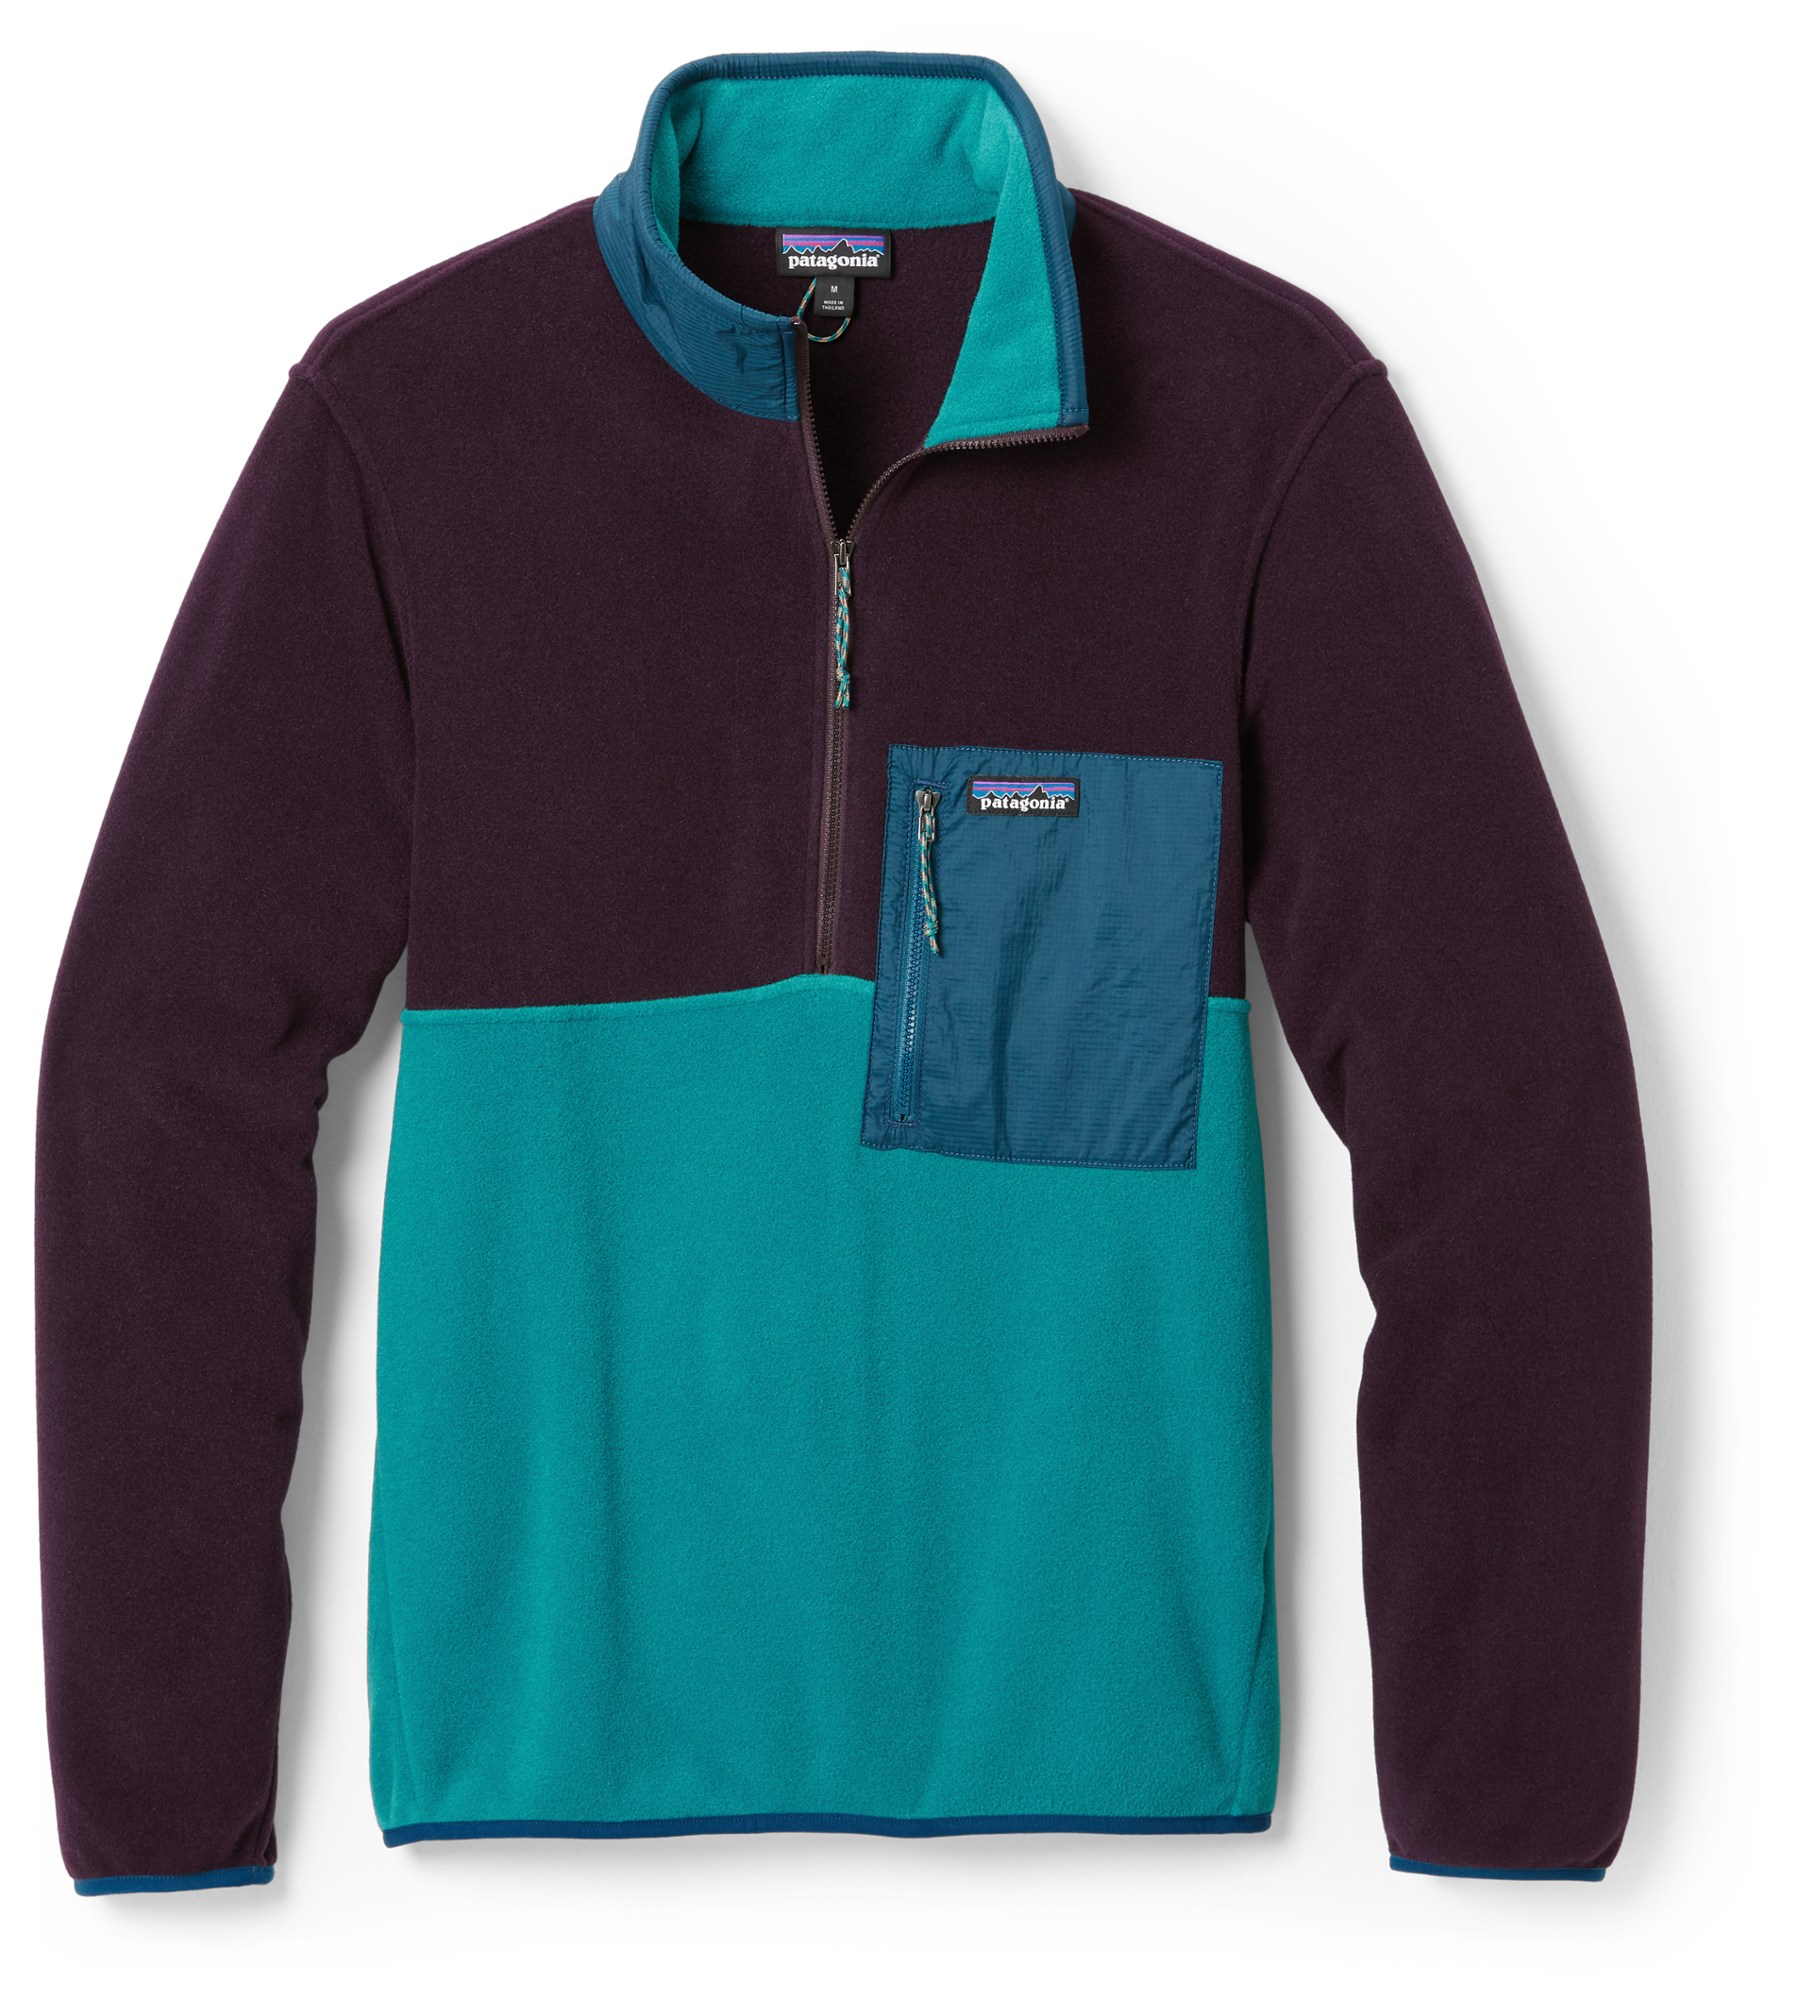 Пуловер Microdini с молнией до половины - мужской Patagonia, синий классический жилет microdini patagonia черный